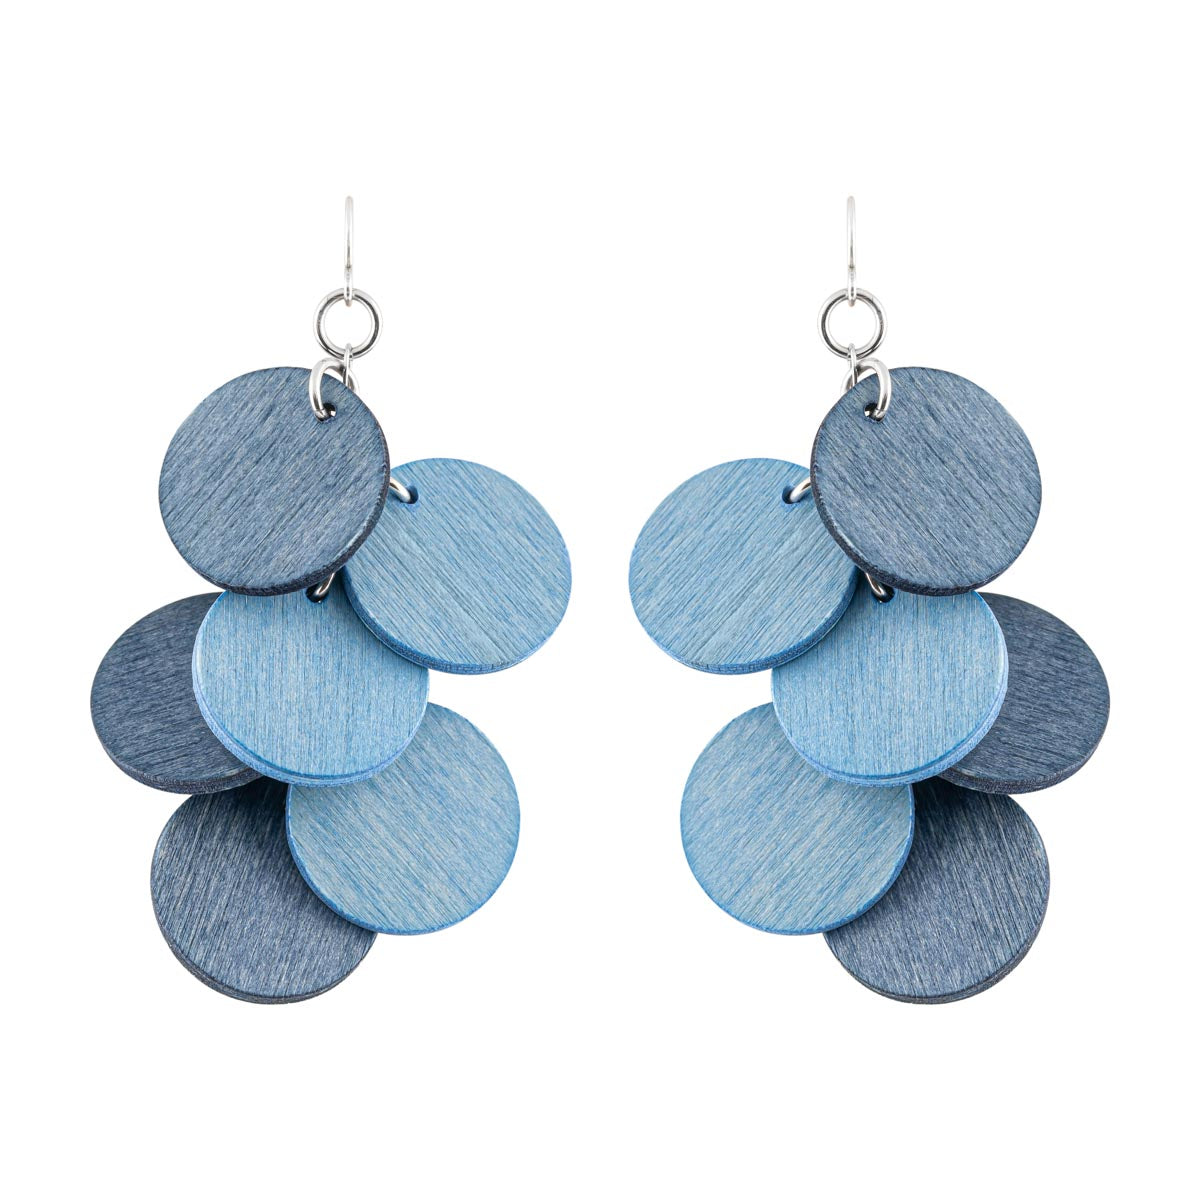 Juolukka earrings, shades of blue